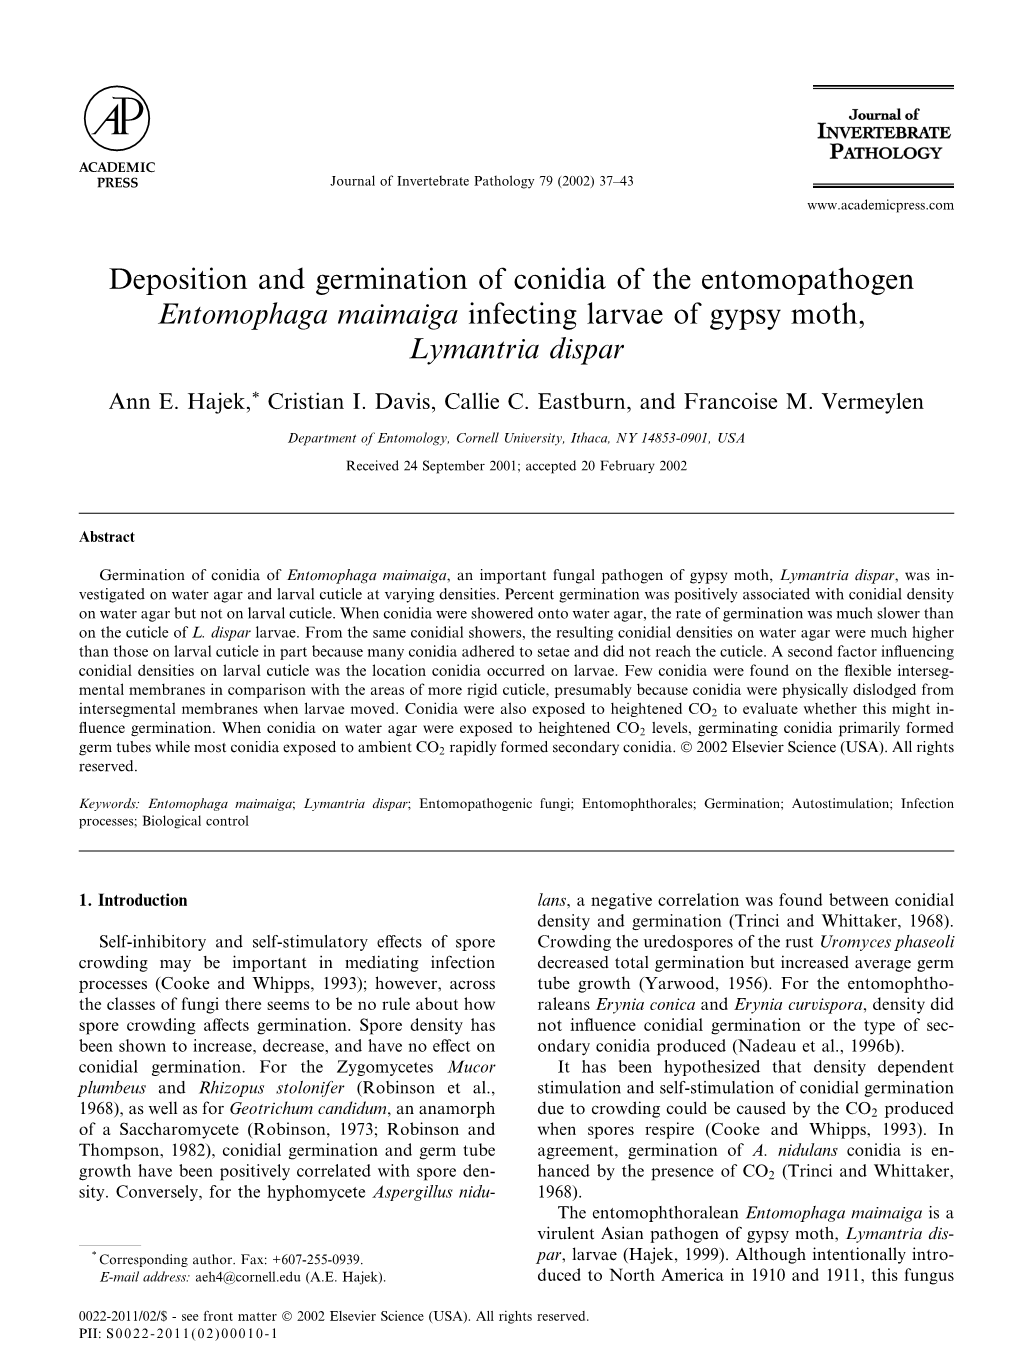 Deposition and Germination of Conidia of the Entomopathogen Entomophaga Maimaiga Infecting Larvae of Gypsy Moth, Lymantria Dispar